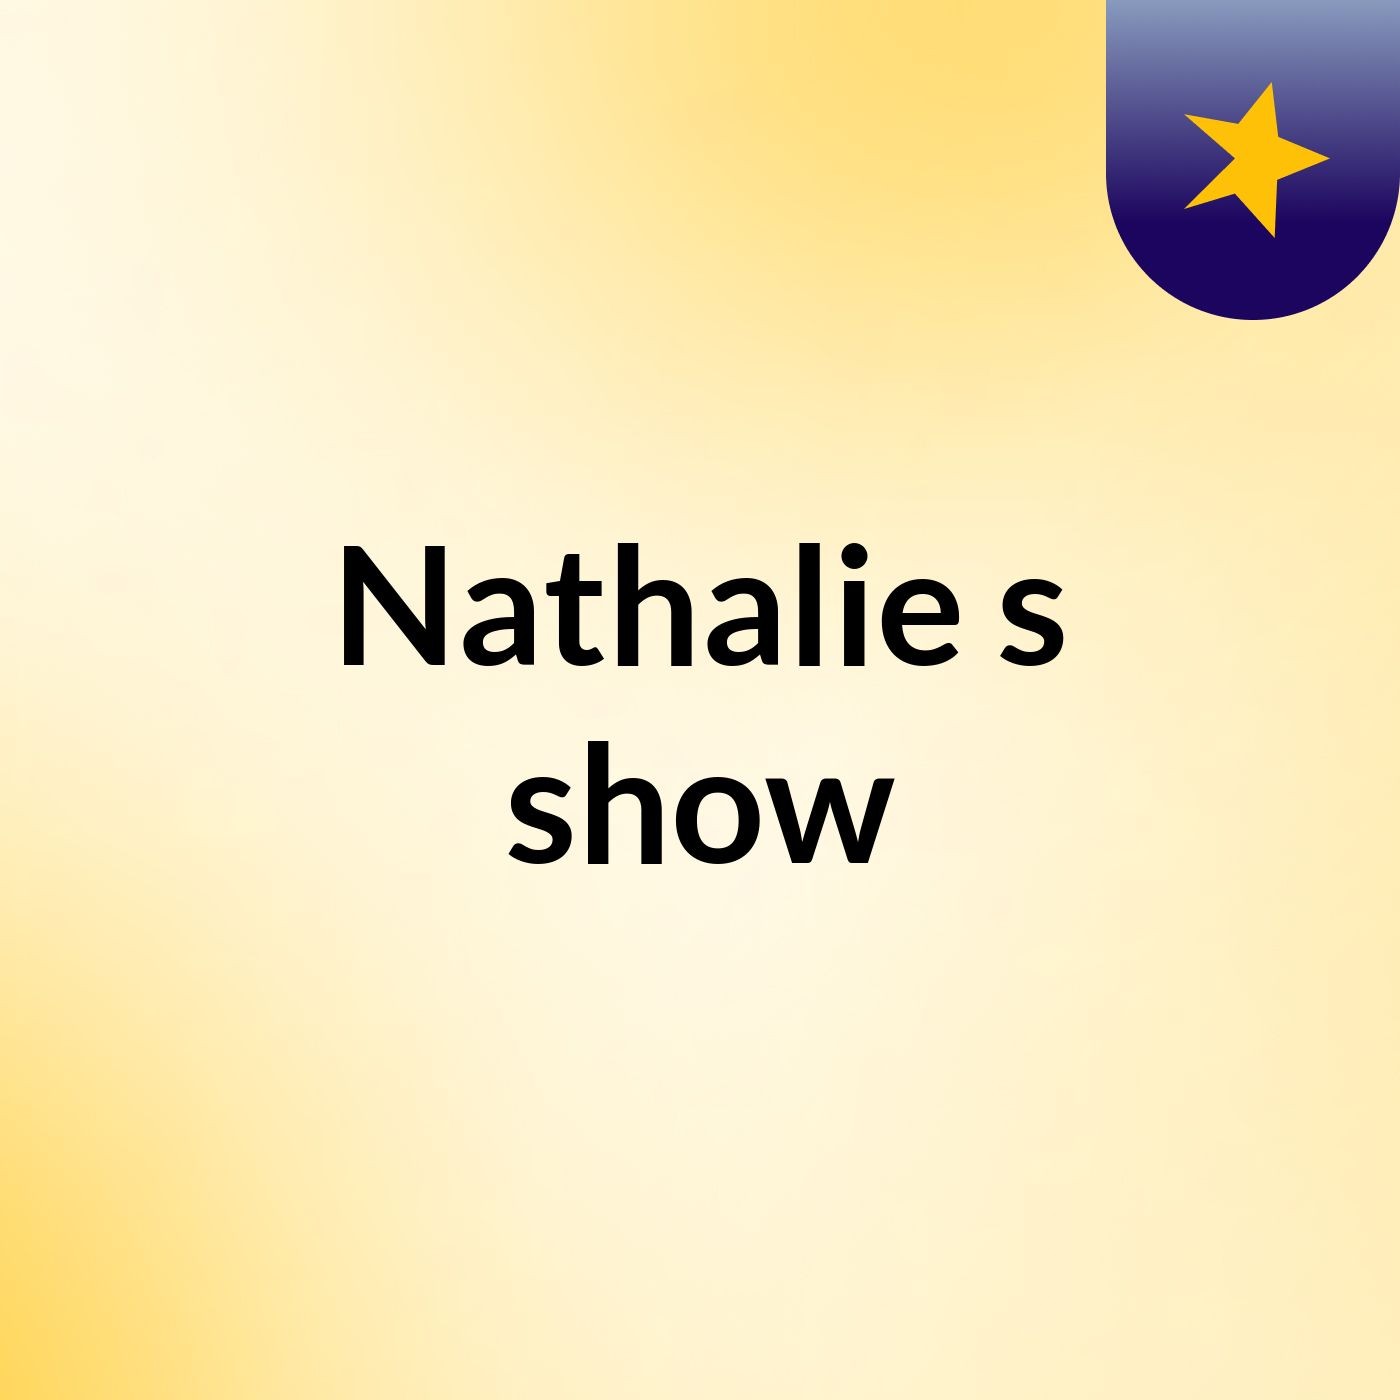 Nathalie's show